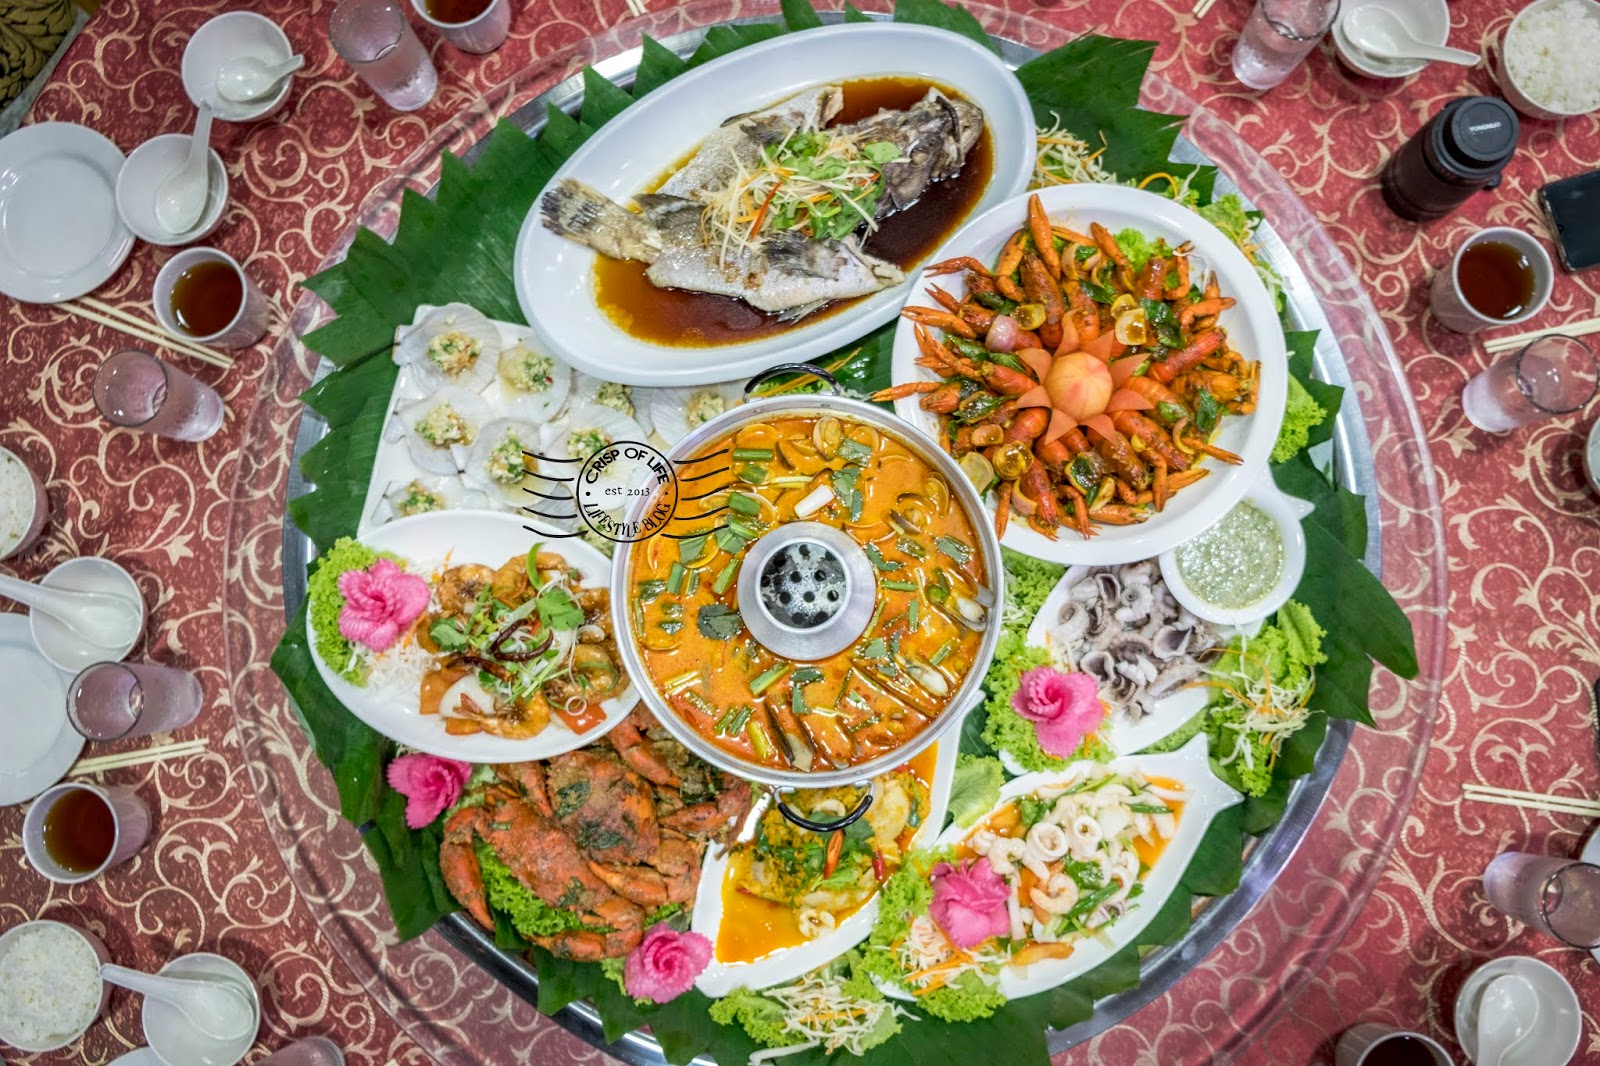 Super Seafood Platter for RM 666 for 10 pax @ Aroi Mak Thai Food Restaurant 中泰海鲜料理